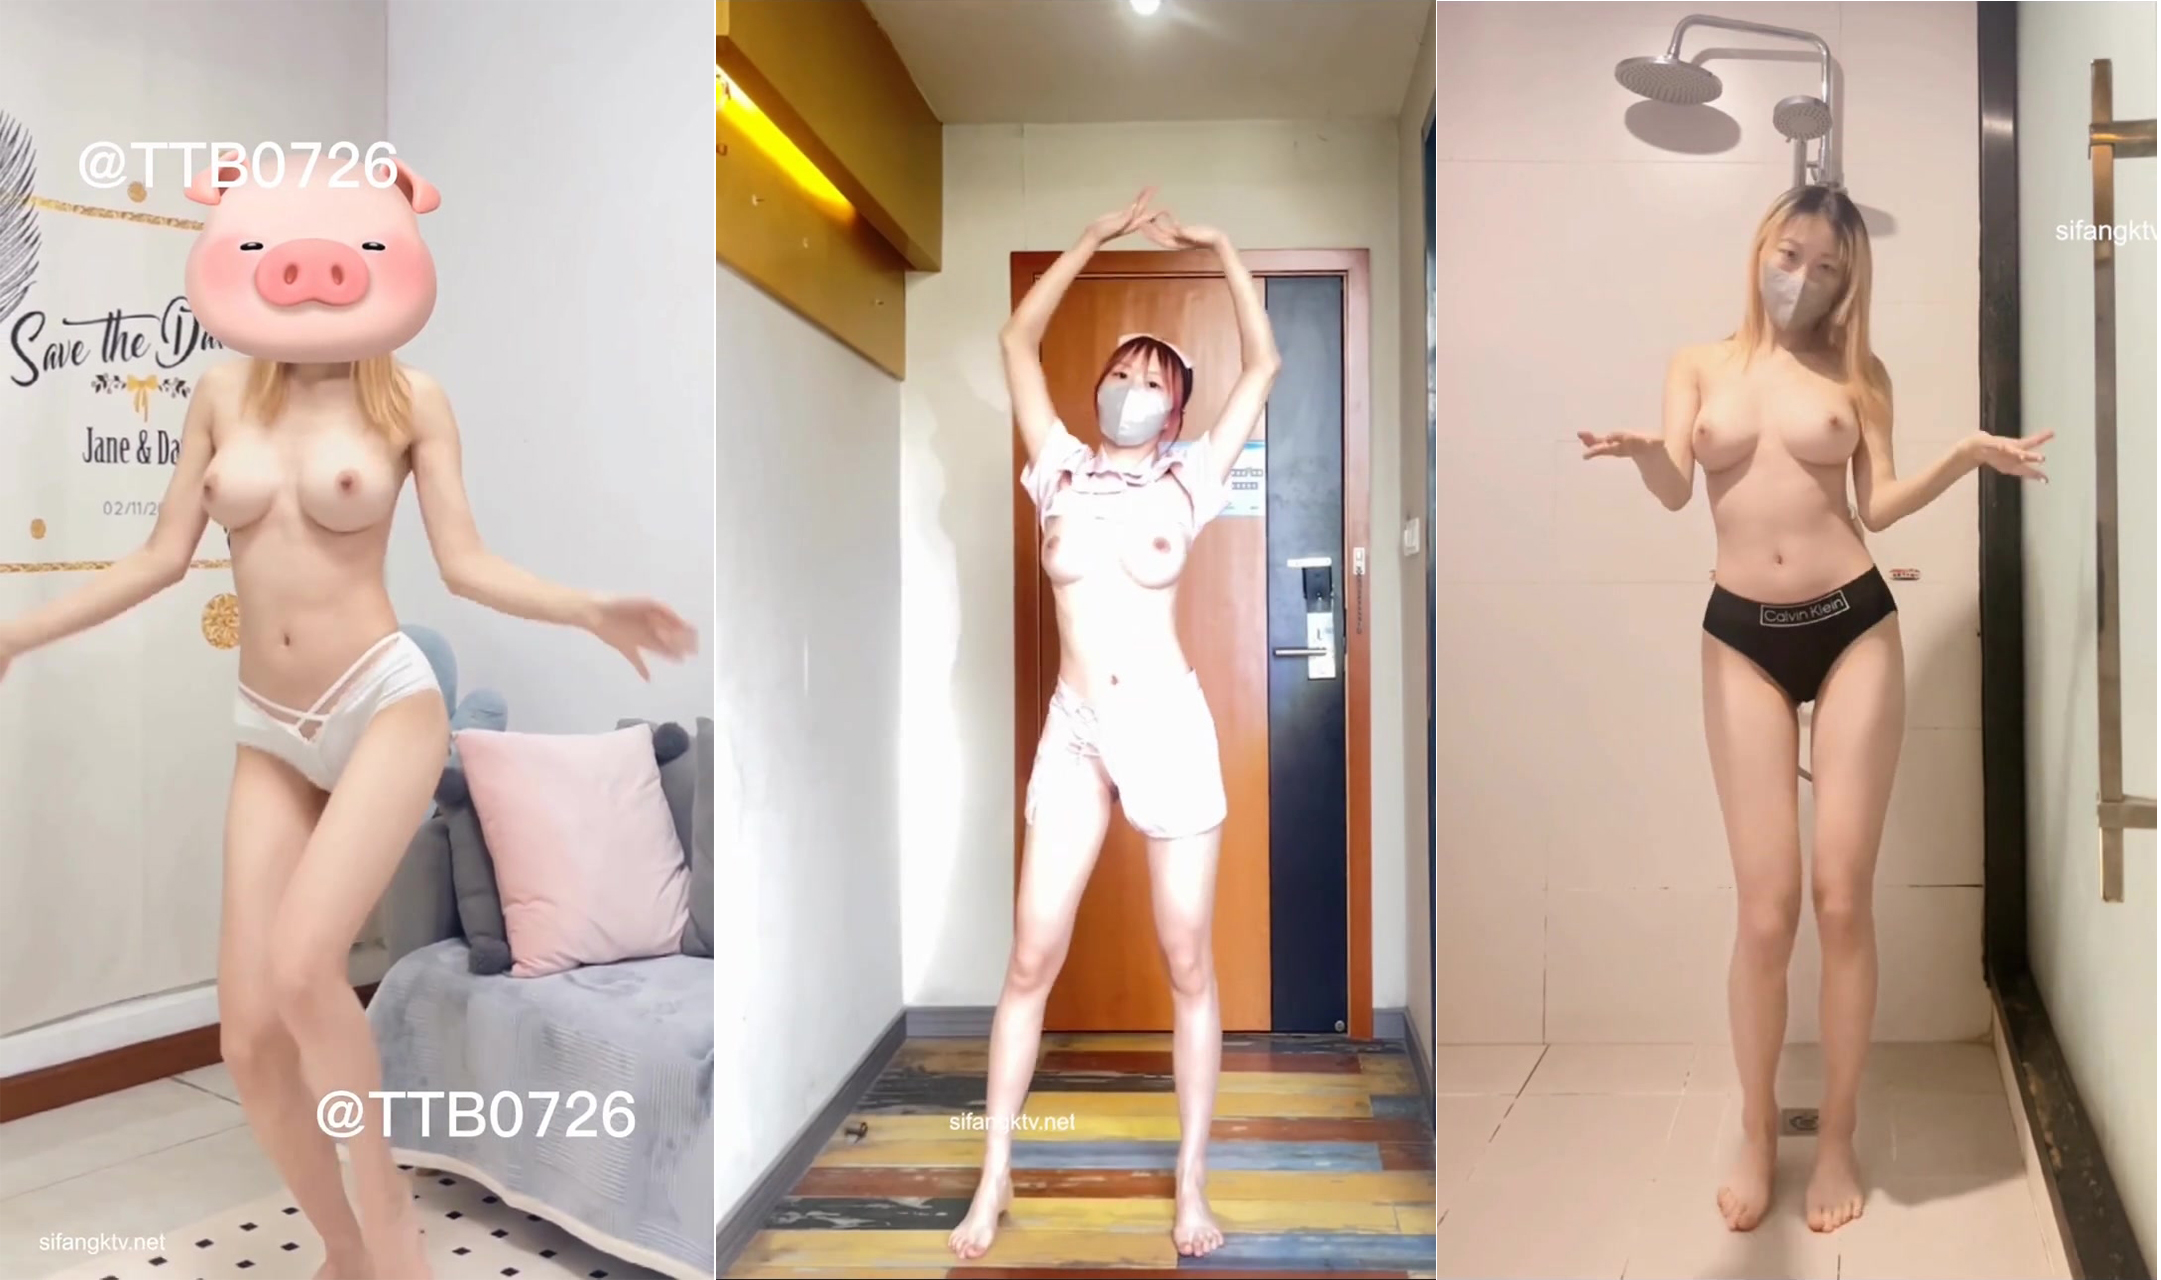 The top body big tits Twitter contrast bitch [TTB0726] landlord heavy customized, naked dance blowing簫特寫啪啪，母狗屬性拉滿合集 (2)